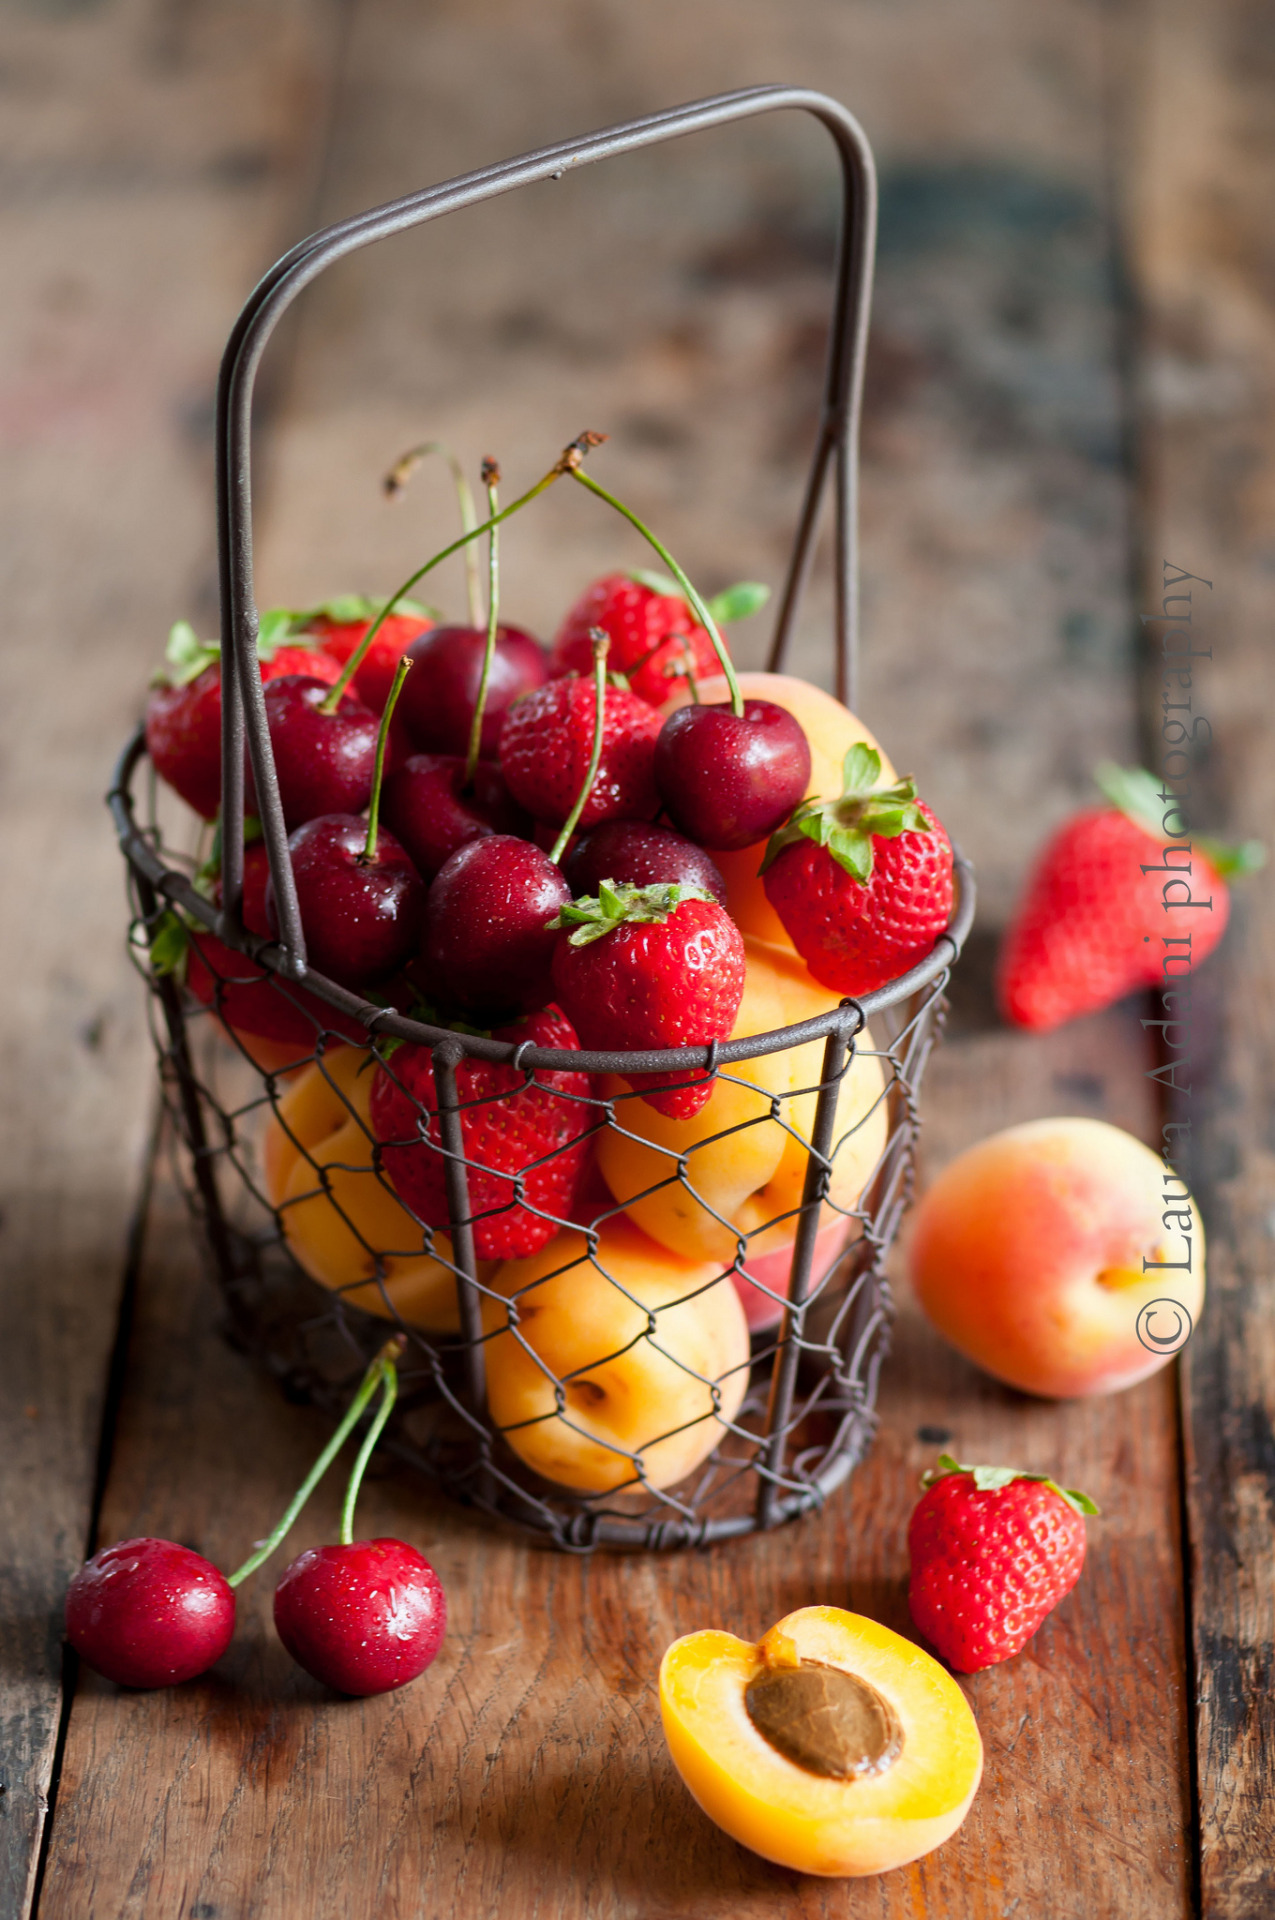 food photo fruit berry cherry juicy apple delicious sweet healthy health tasty